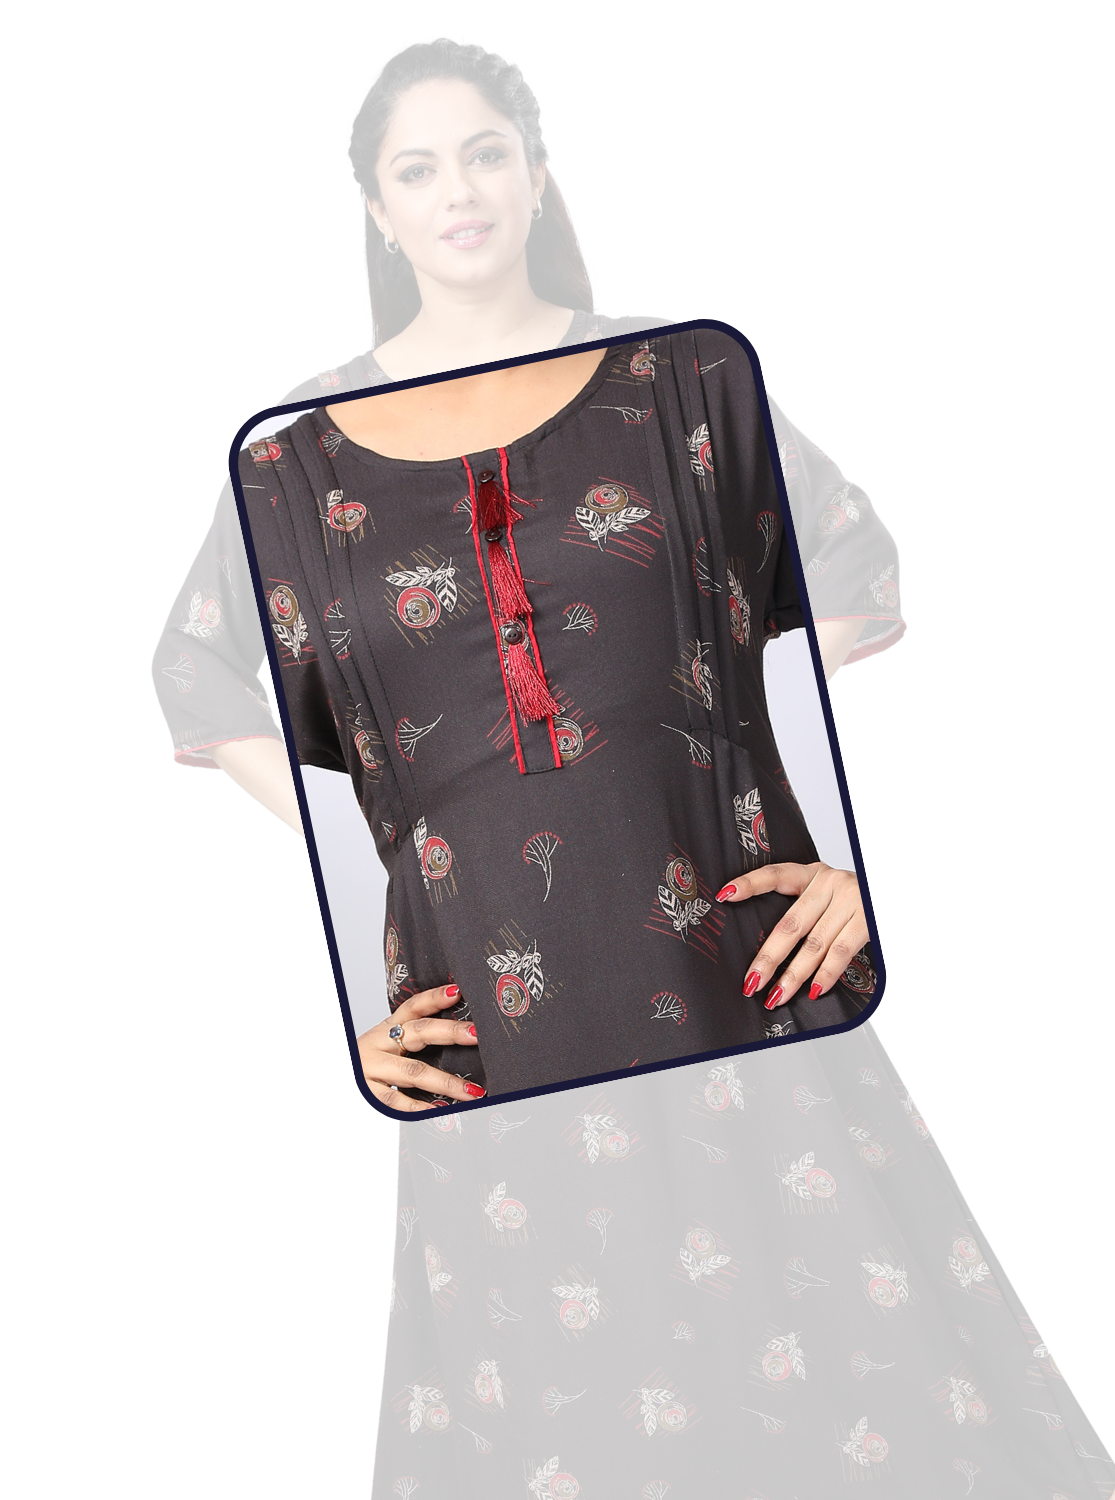 MANGAI New Stylish Alpine KURTI Style | Full Length KURTI Model Nighties | Side Pocket | Half Sleeve | Perfect Nightwear Collection's for Trendy Women's